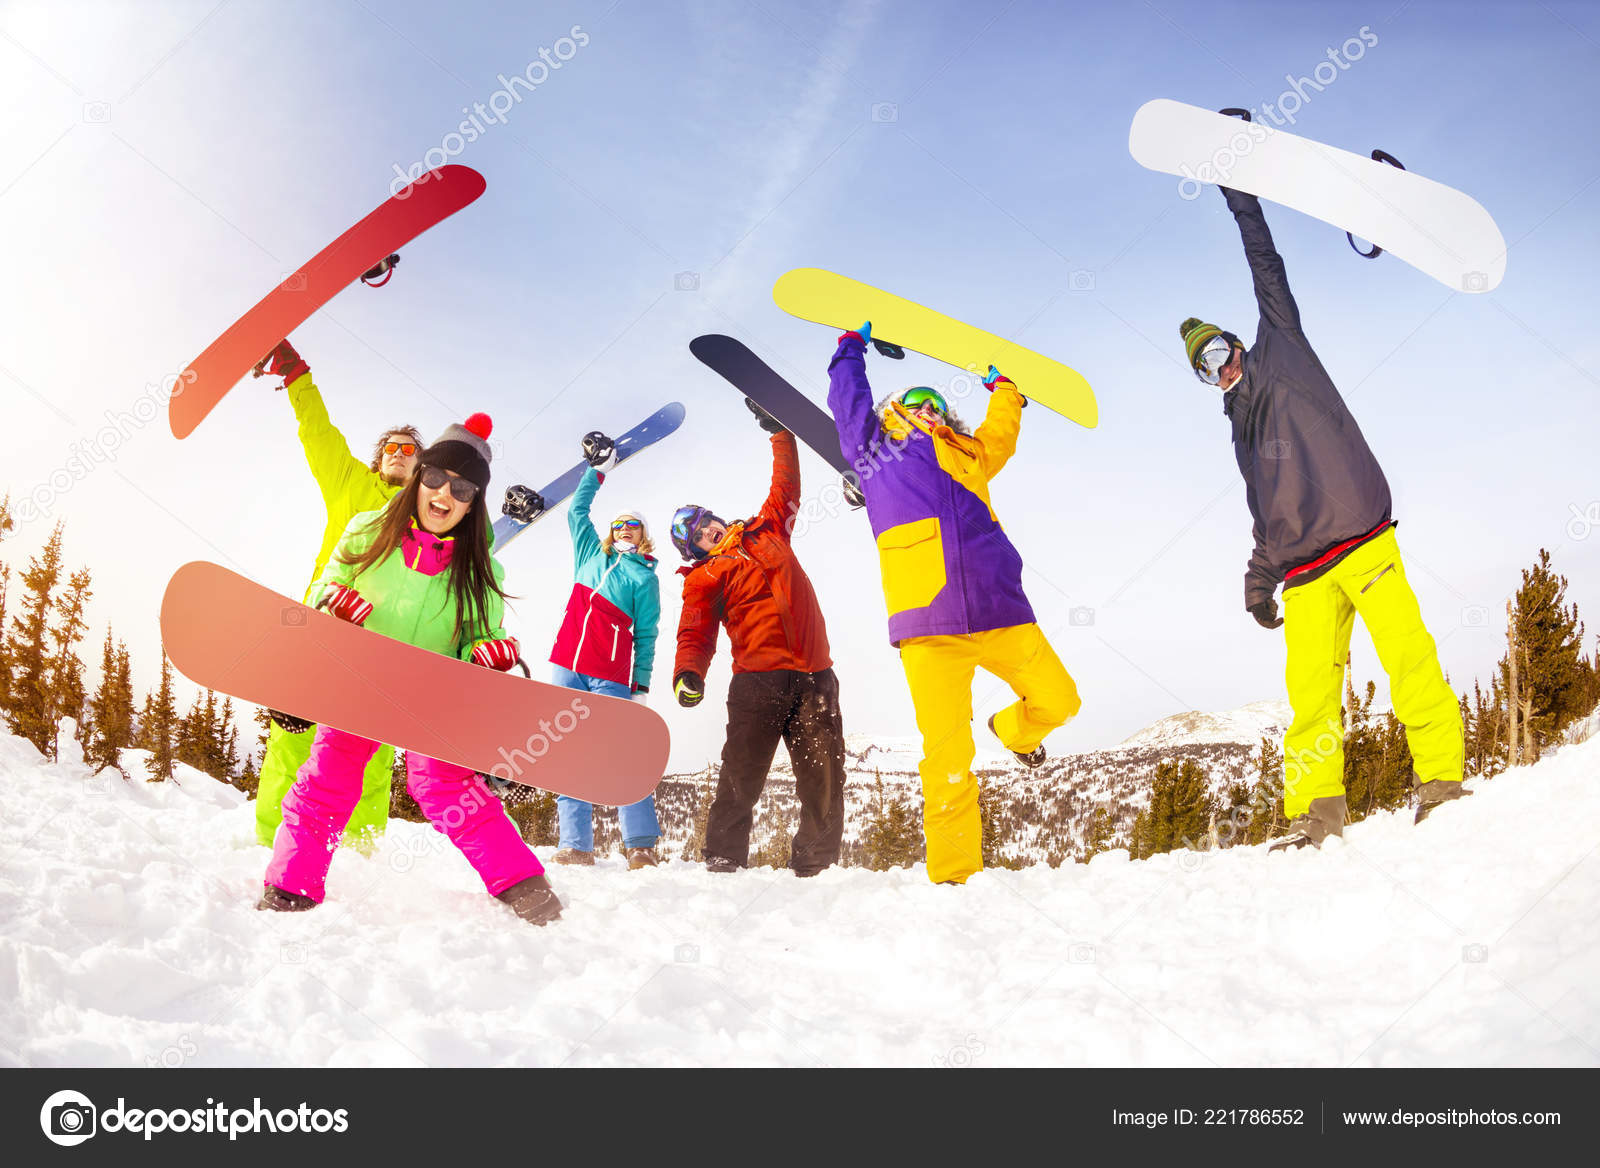 Kaal merknaam Oprecht Group of friends fun ski snowboard resort Stock Photo by ©cppzone.mail.ru  221786552